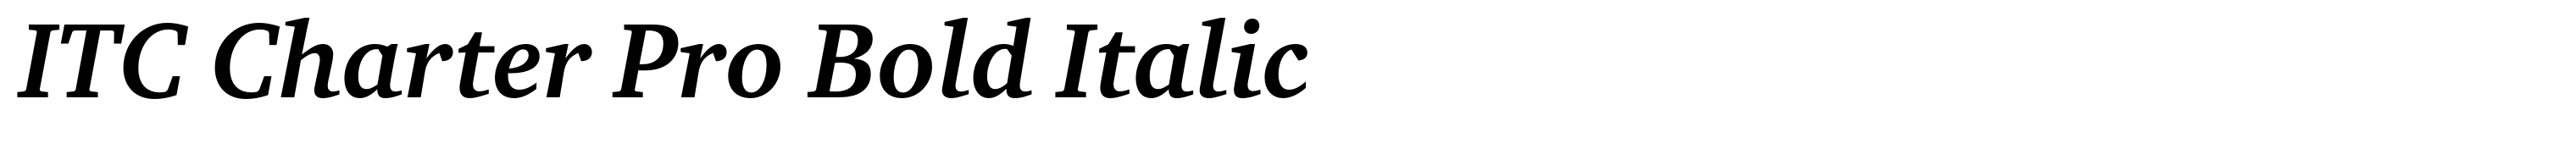 ITC Charter Pro Bold Italic